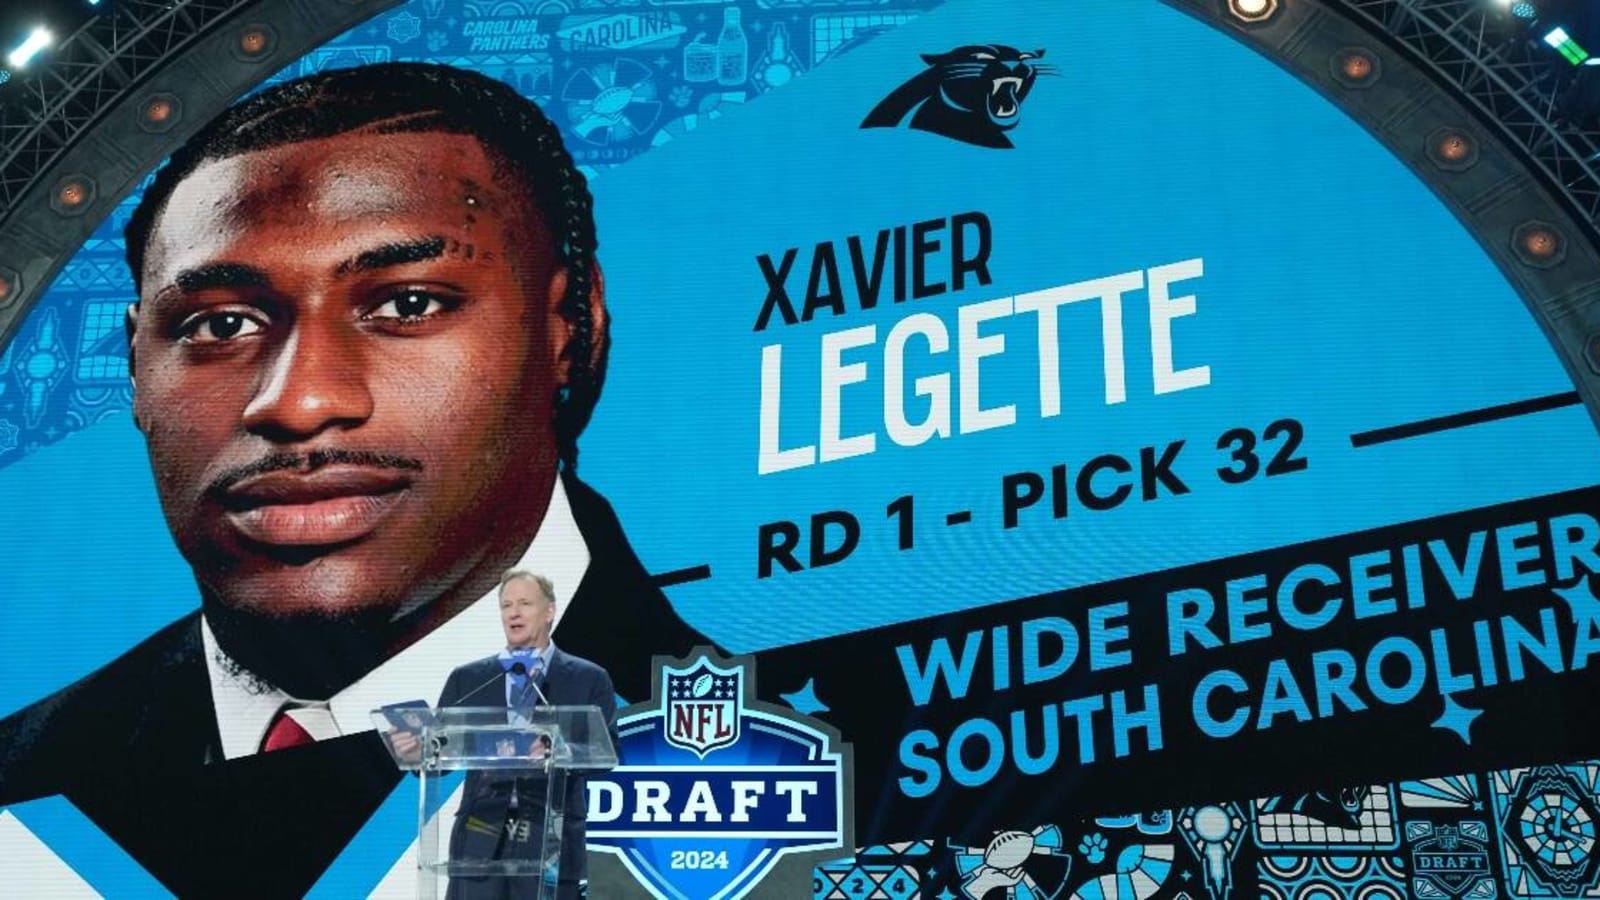 ESPN: Carolina Panthers’ selection of South Carolina WR Xavier Legette among best Round 1 picks